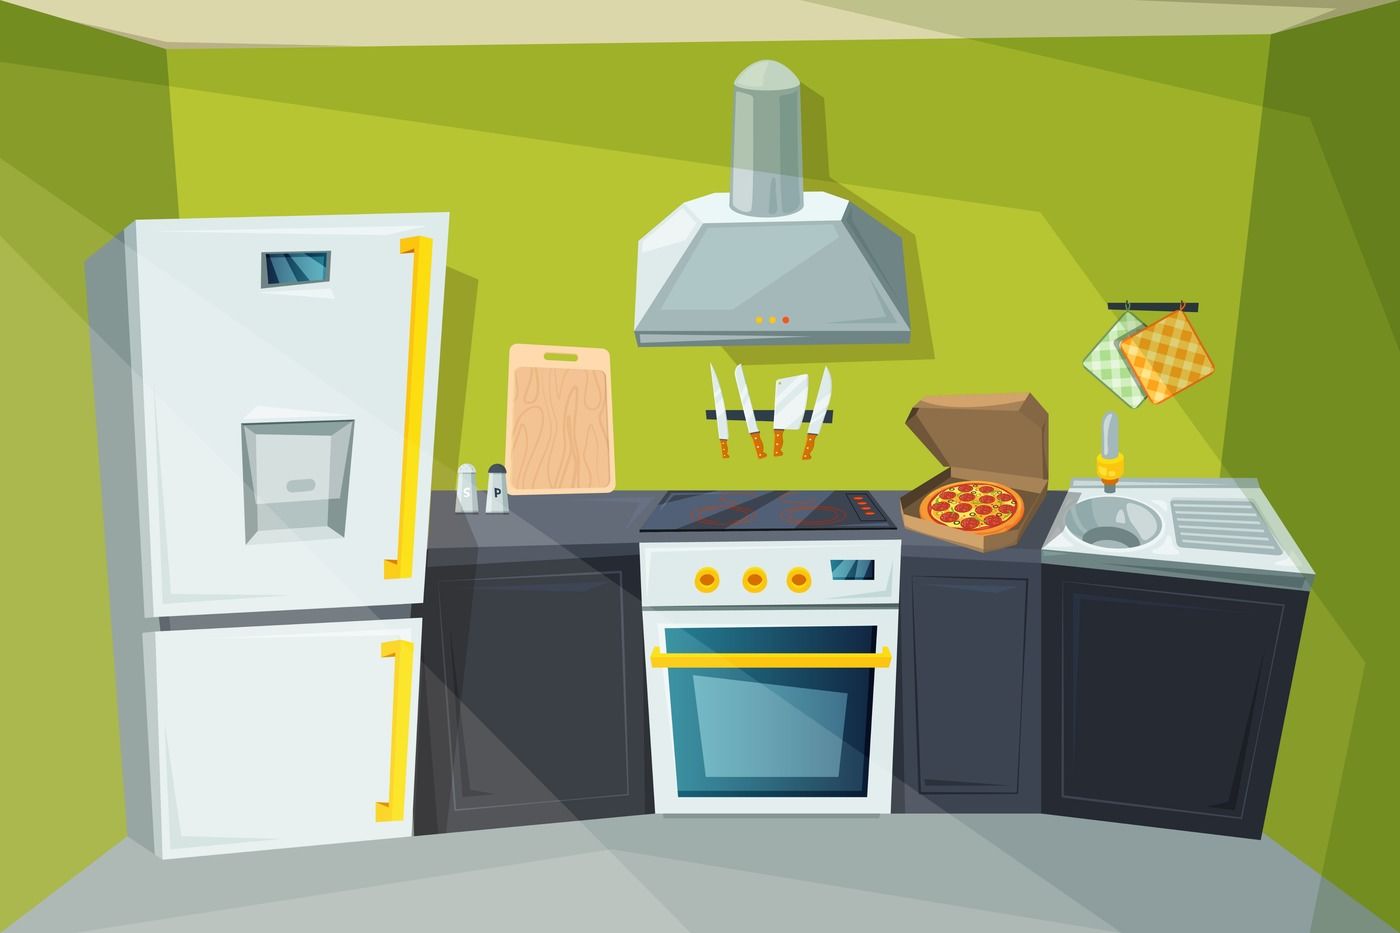 Cartoon illustration of kitchen interior with various modern furniture